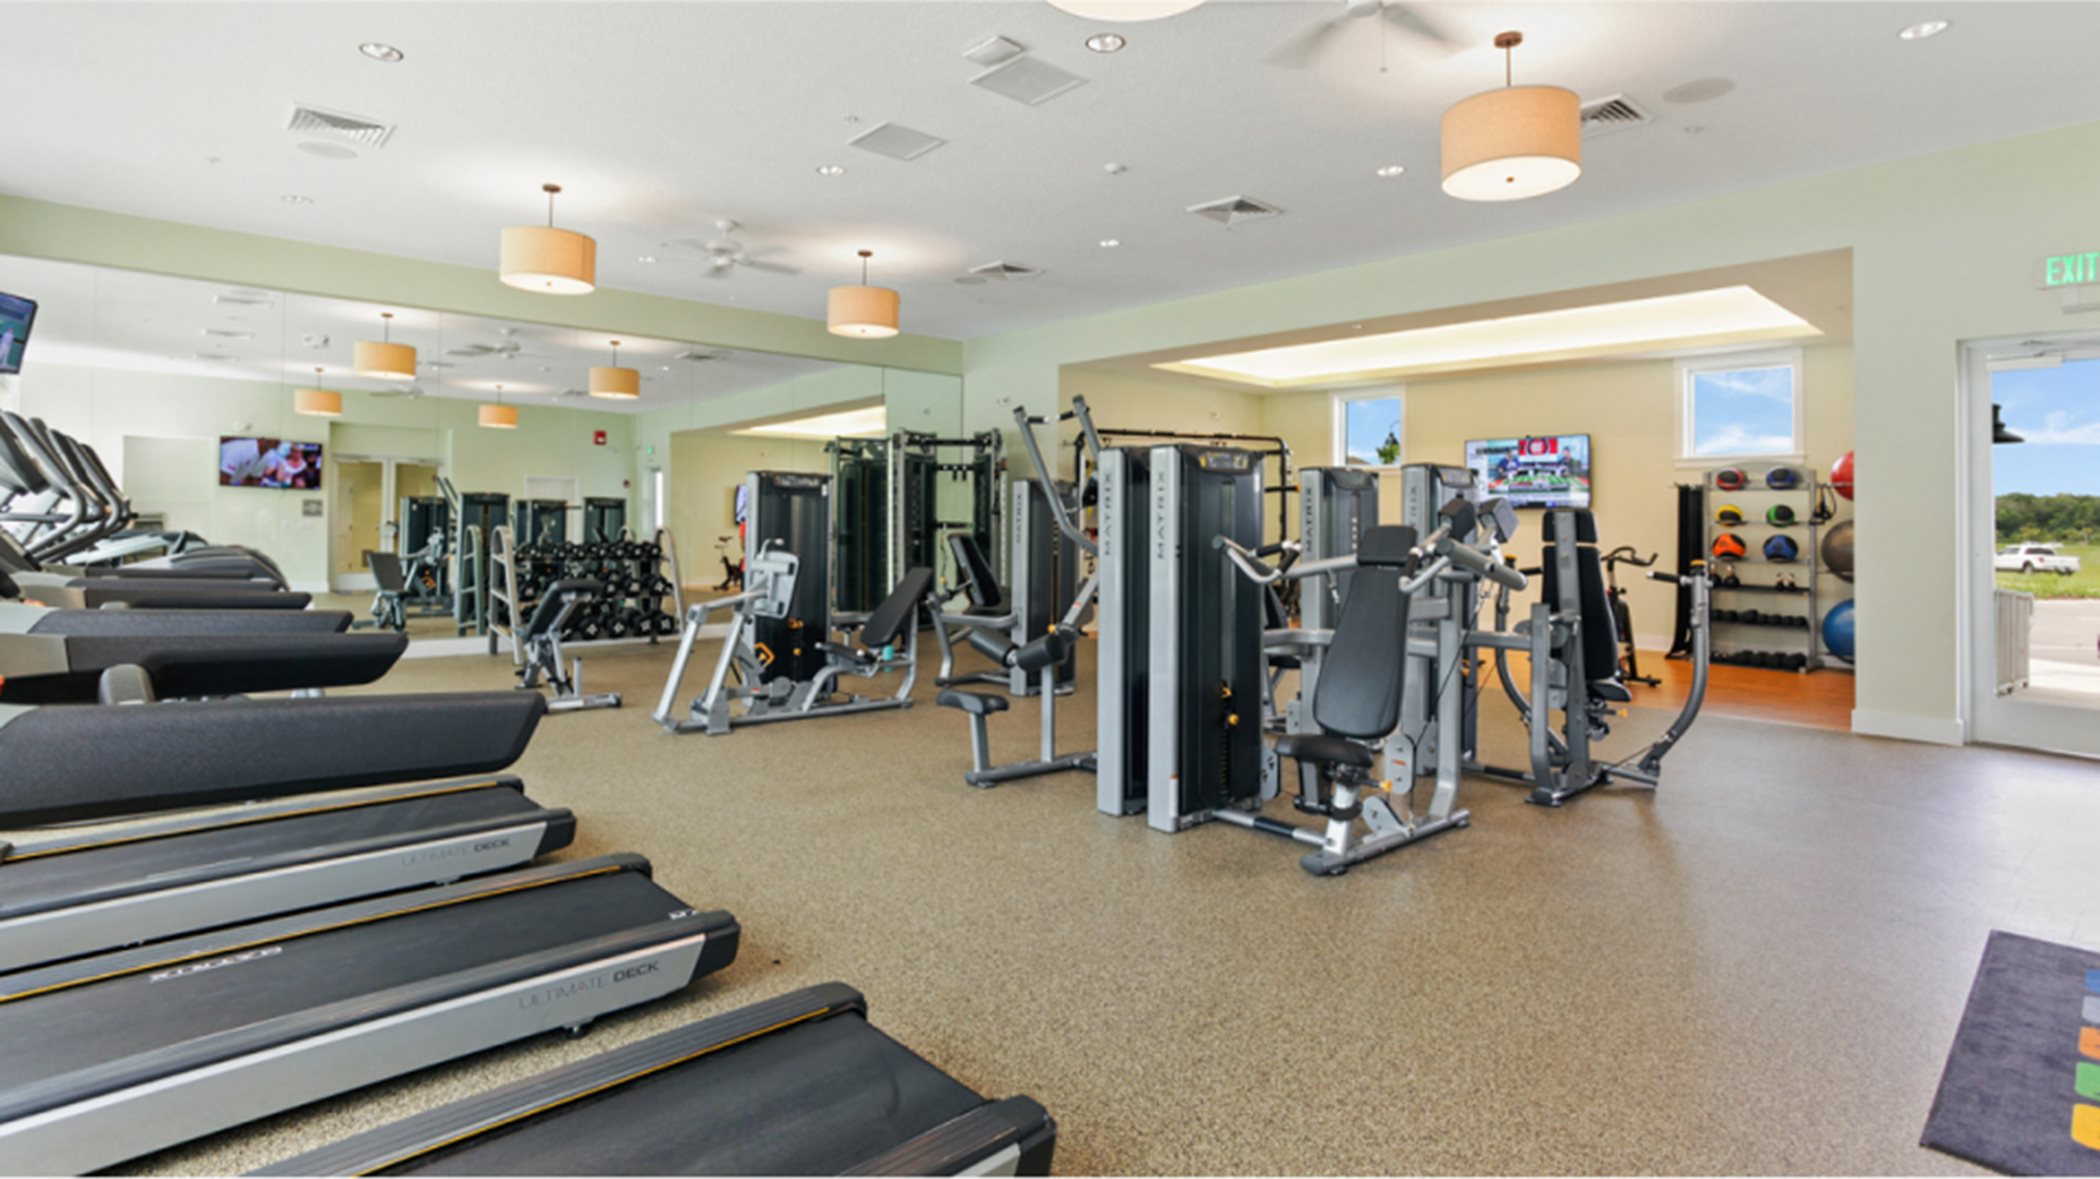 Storey Park fitness center weight machines, treadmills